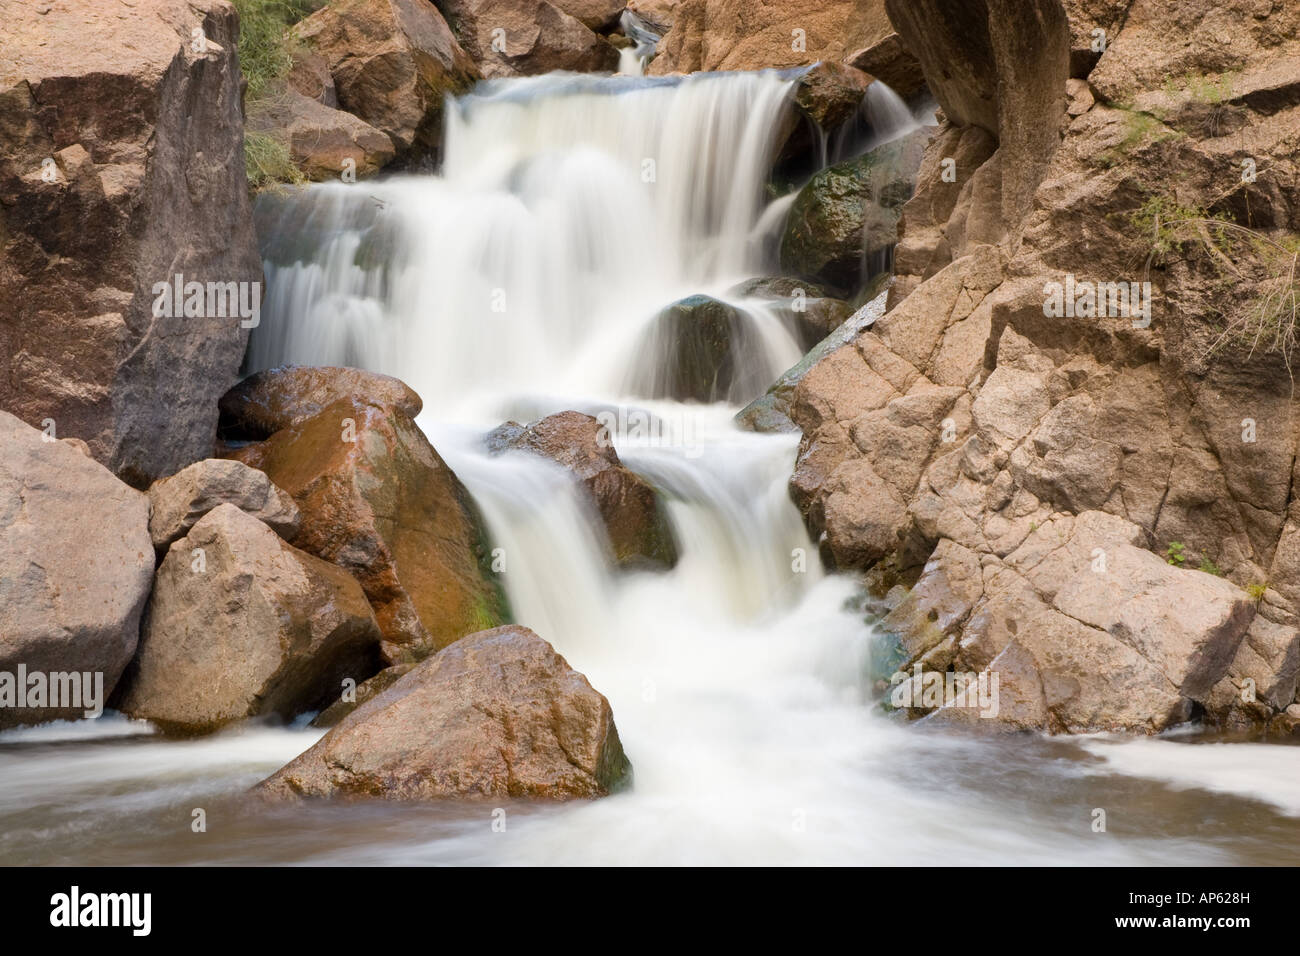 Cascada nuevo mexico fotografías e imágenes de alta resolución - Alamy